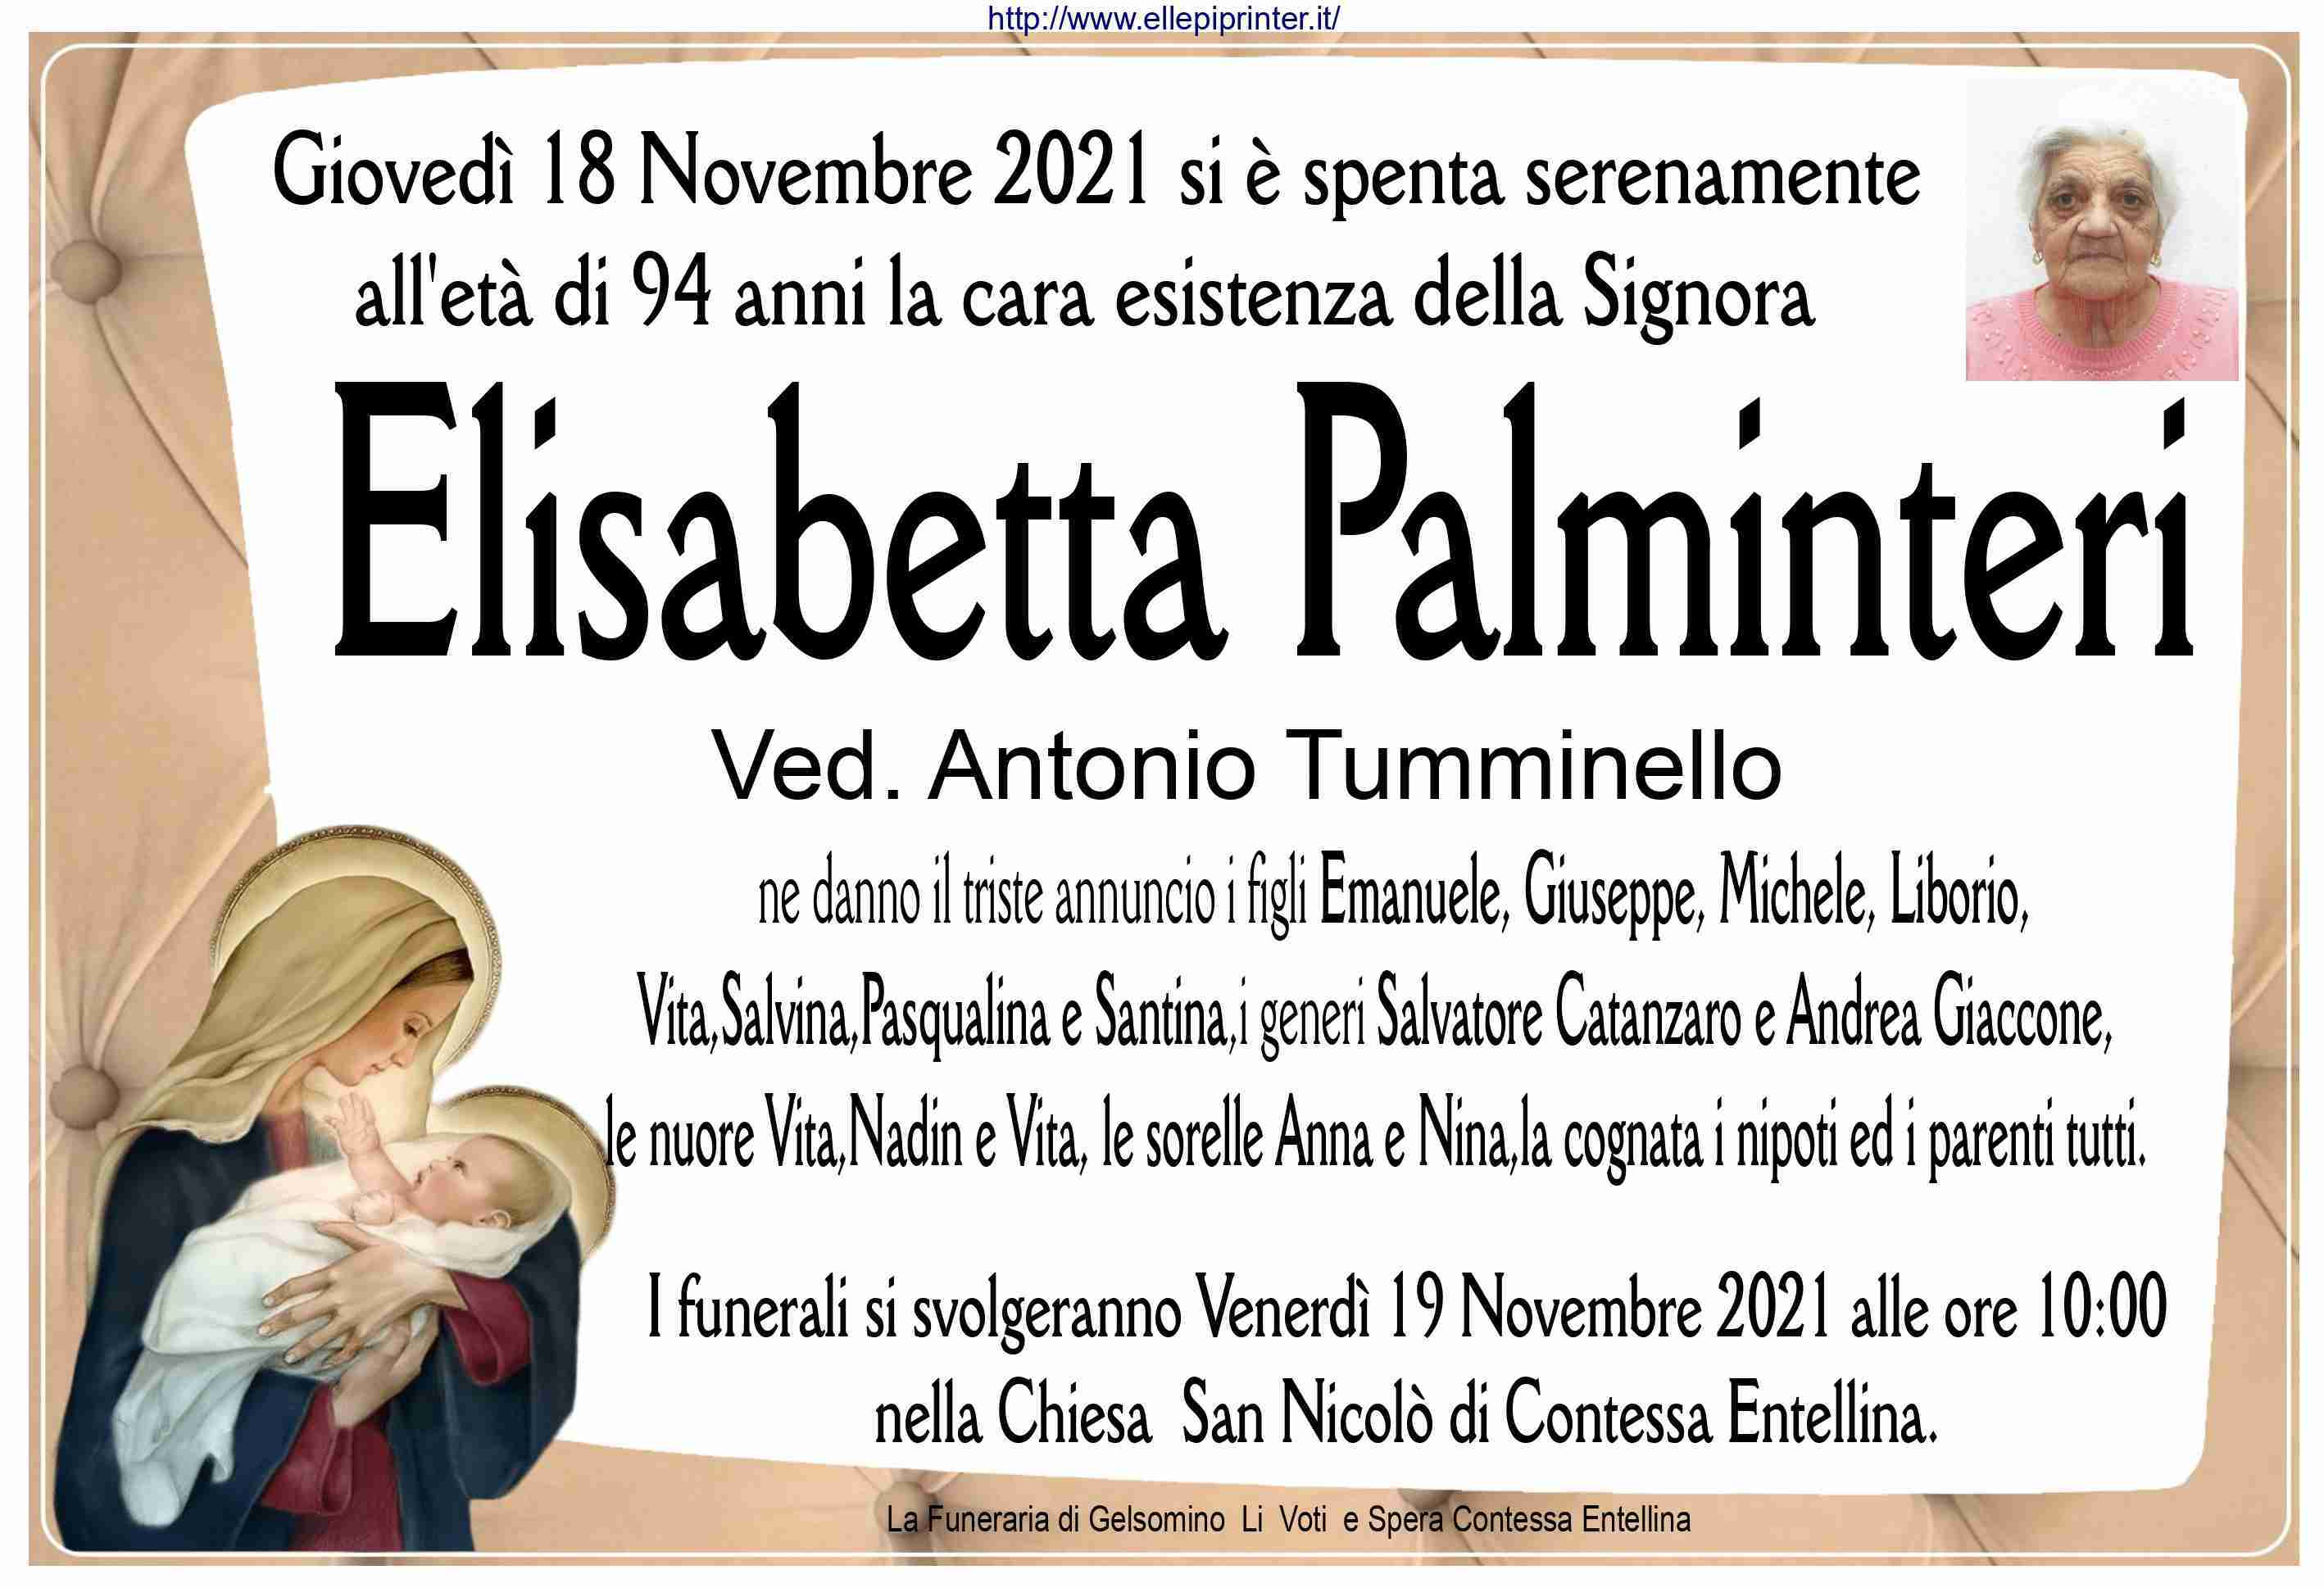 Elisabetta Palminteri